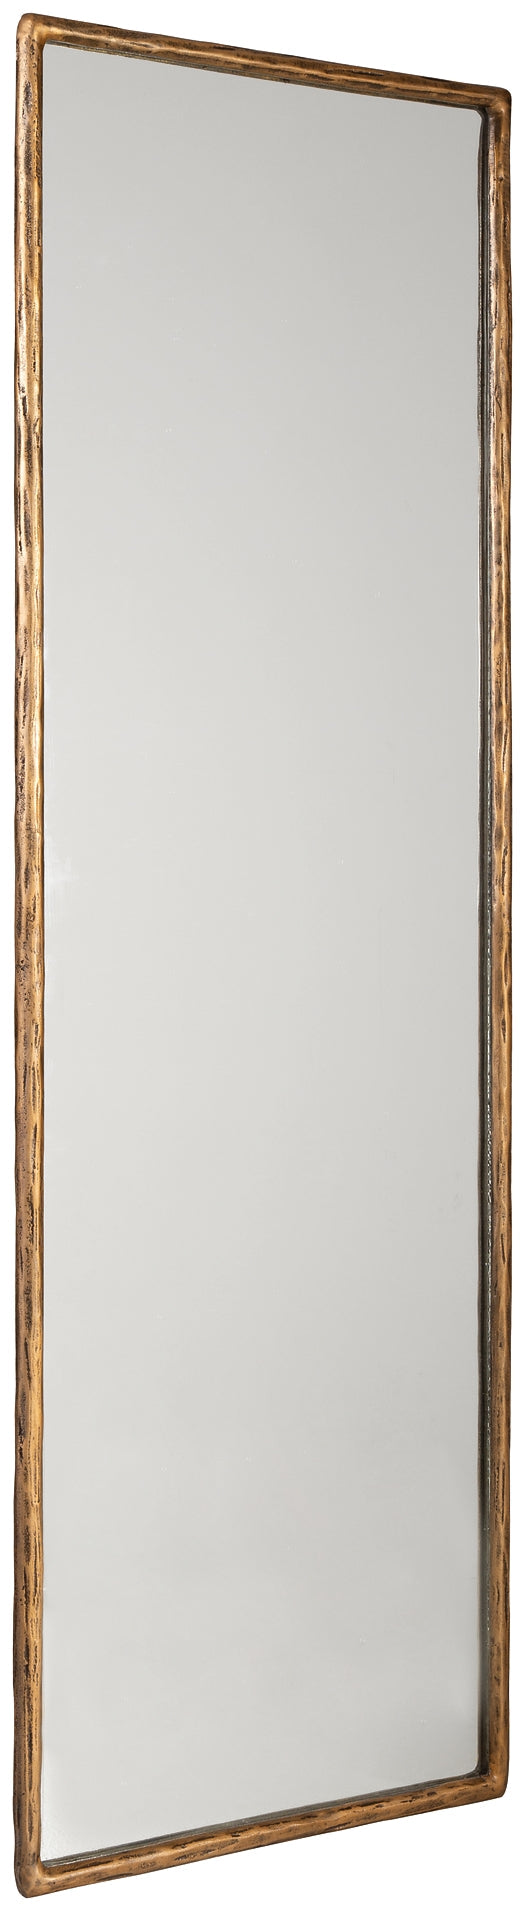 Ryandale Floor Mirror at Cloud 9 Mattress & Furniture furniture, home furnishing, home decor